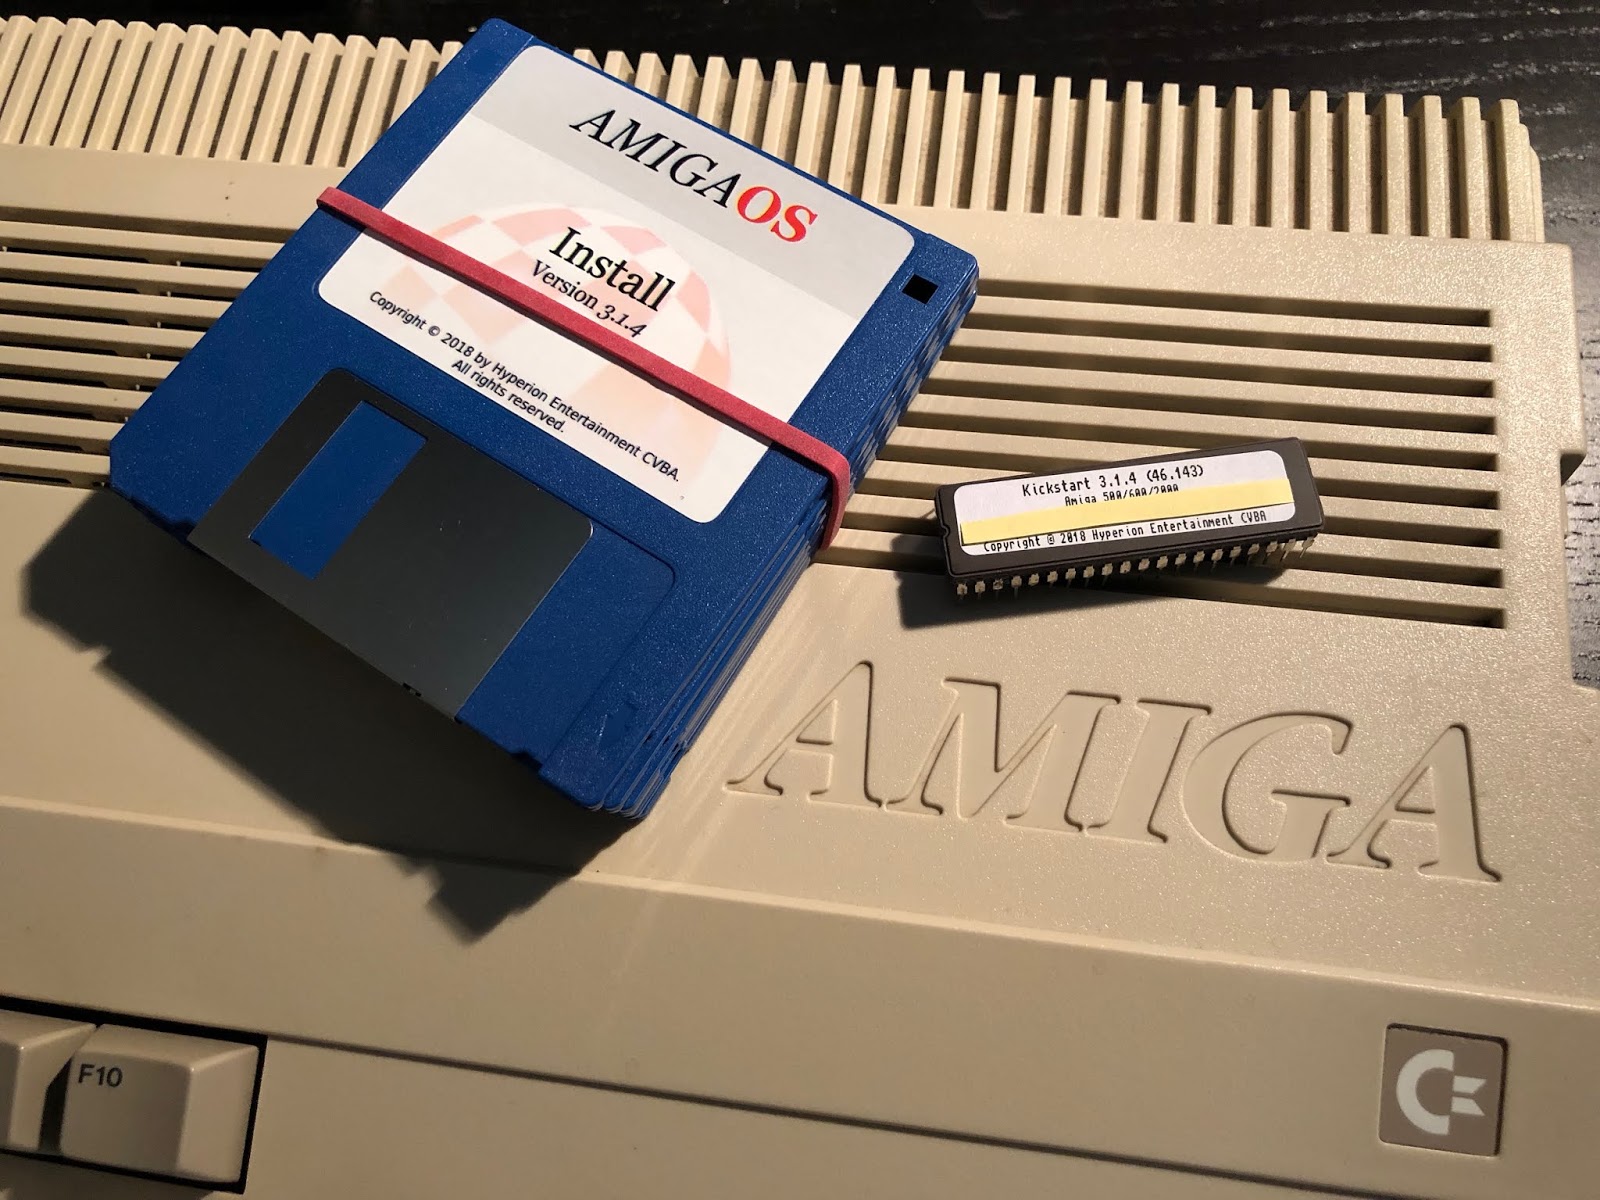 Epsilon S Amiga Blog Amigaos 3 1 4 On A500